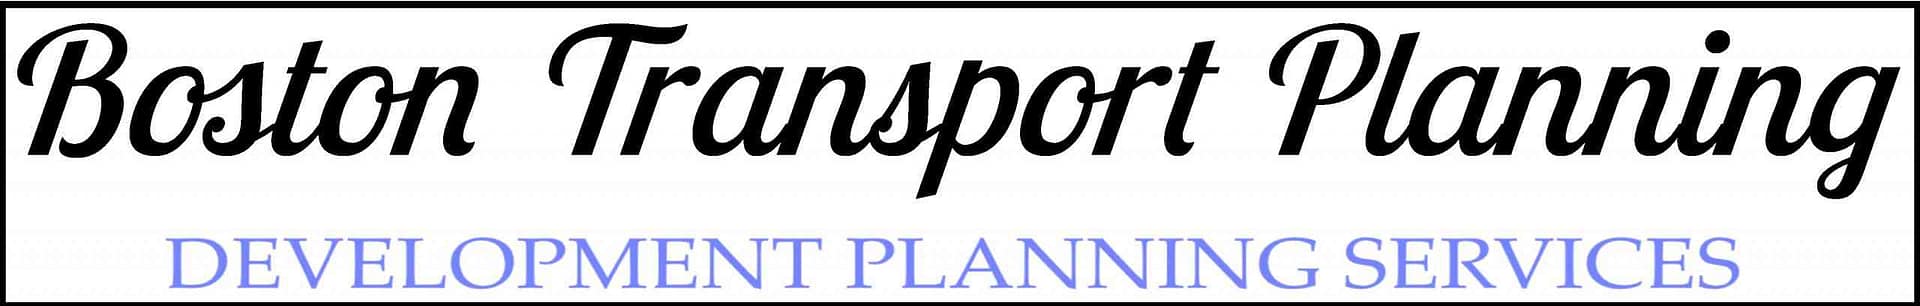 (c) Bostontransportplanning.co.uk